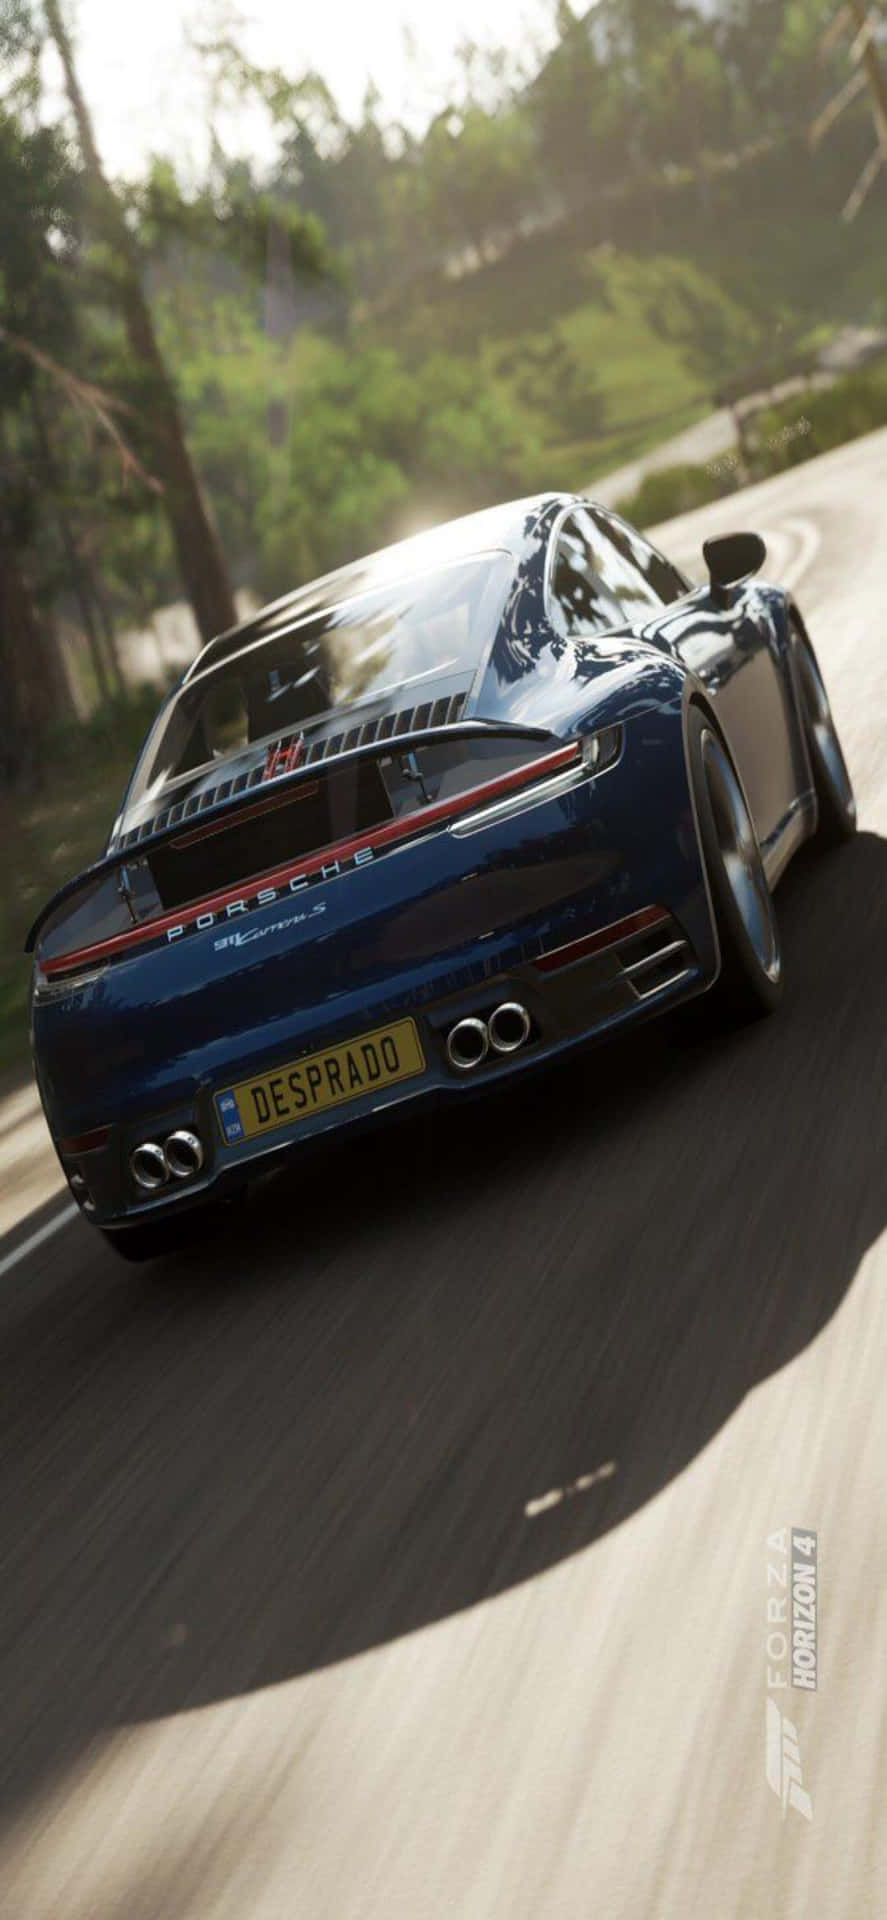 Image  “Speed and Adrenaline - Iphone Xs Forza Horizon 4”